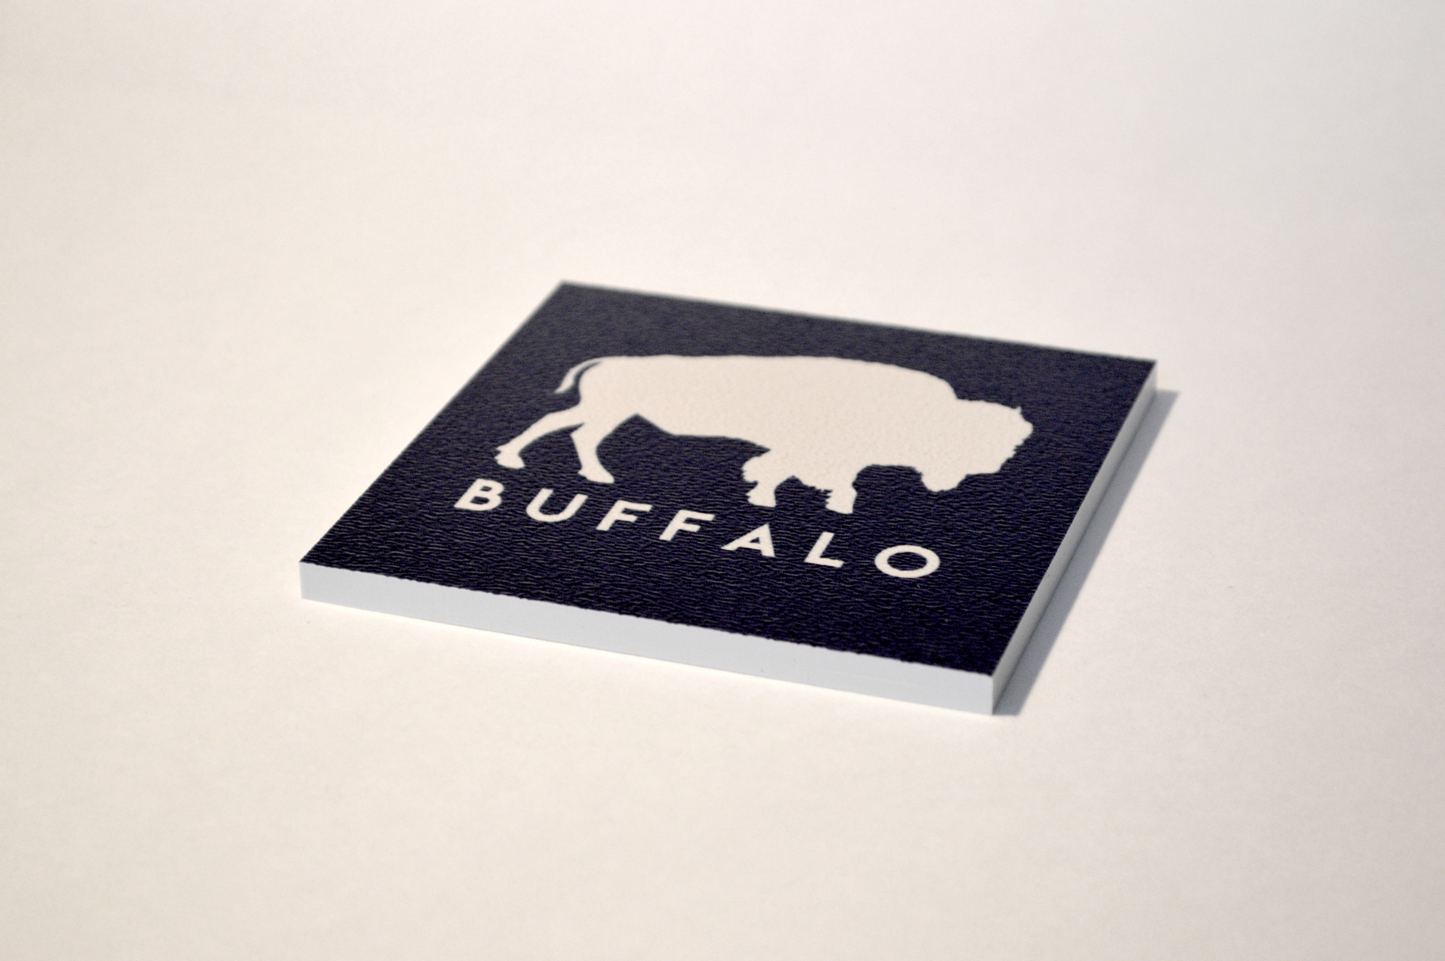 Buffalo Classic Blue Square Coaster Designed and Handcrafted in Buffalo NY